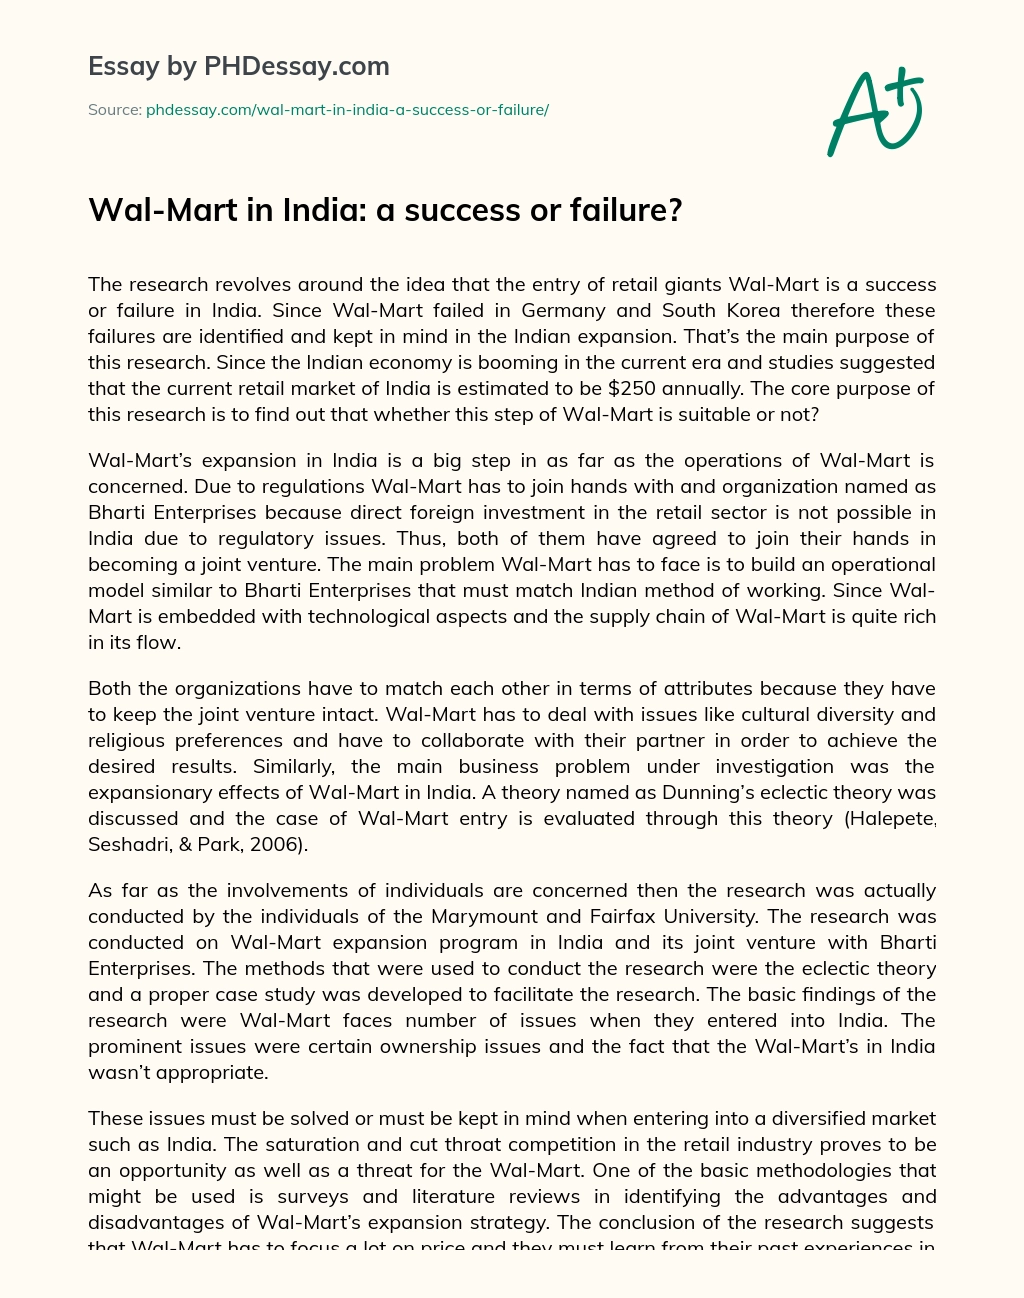 Wal-Mart in India: a success or failure? essay